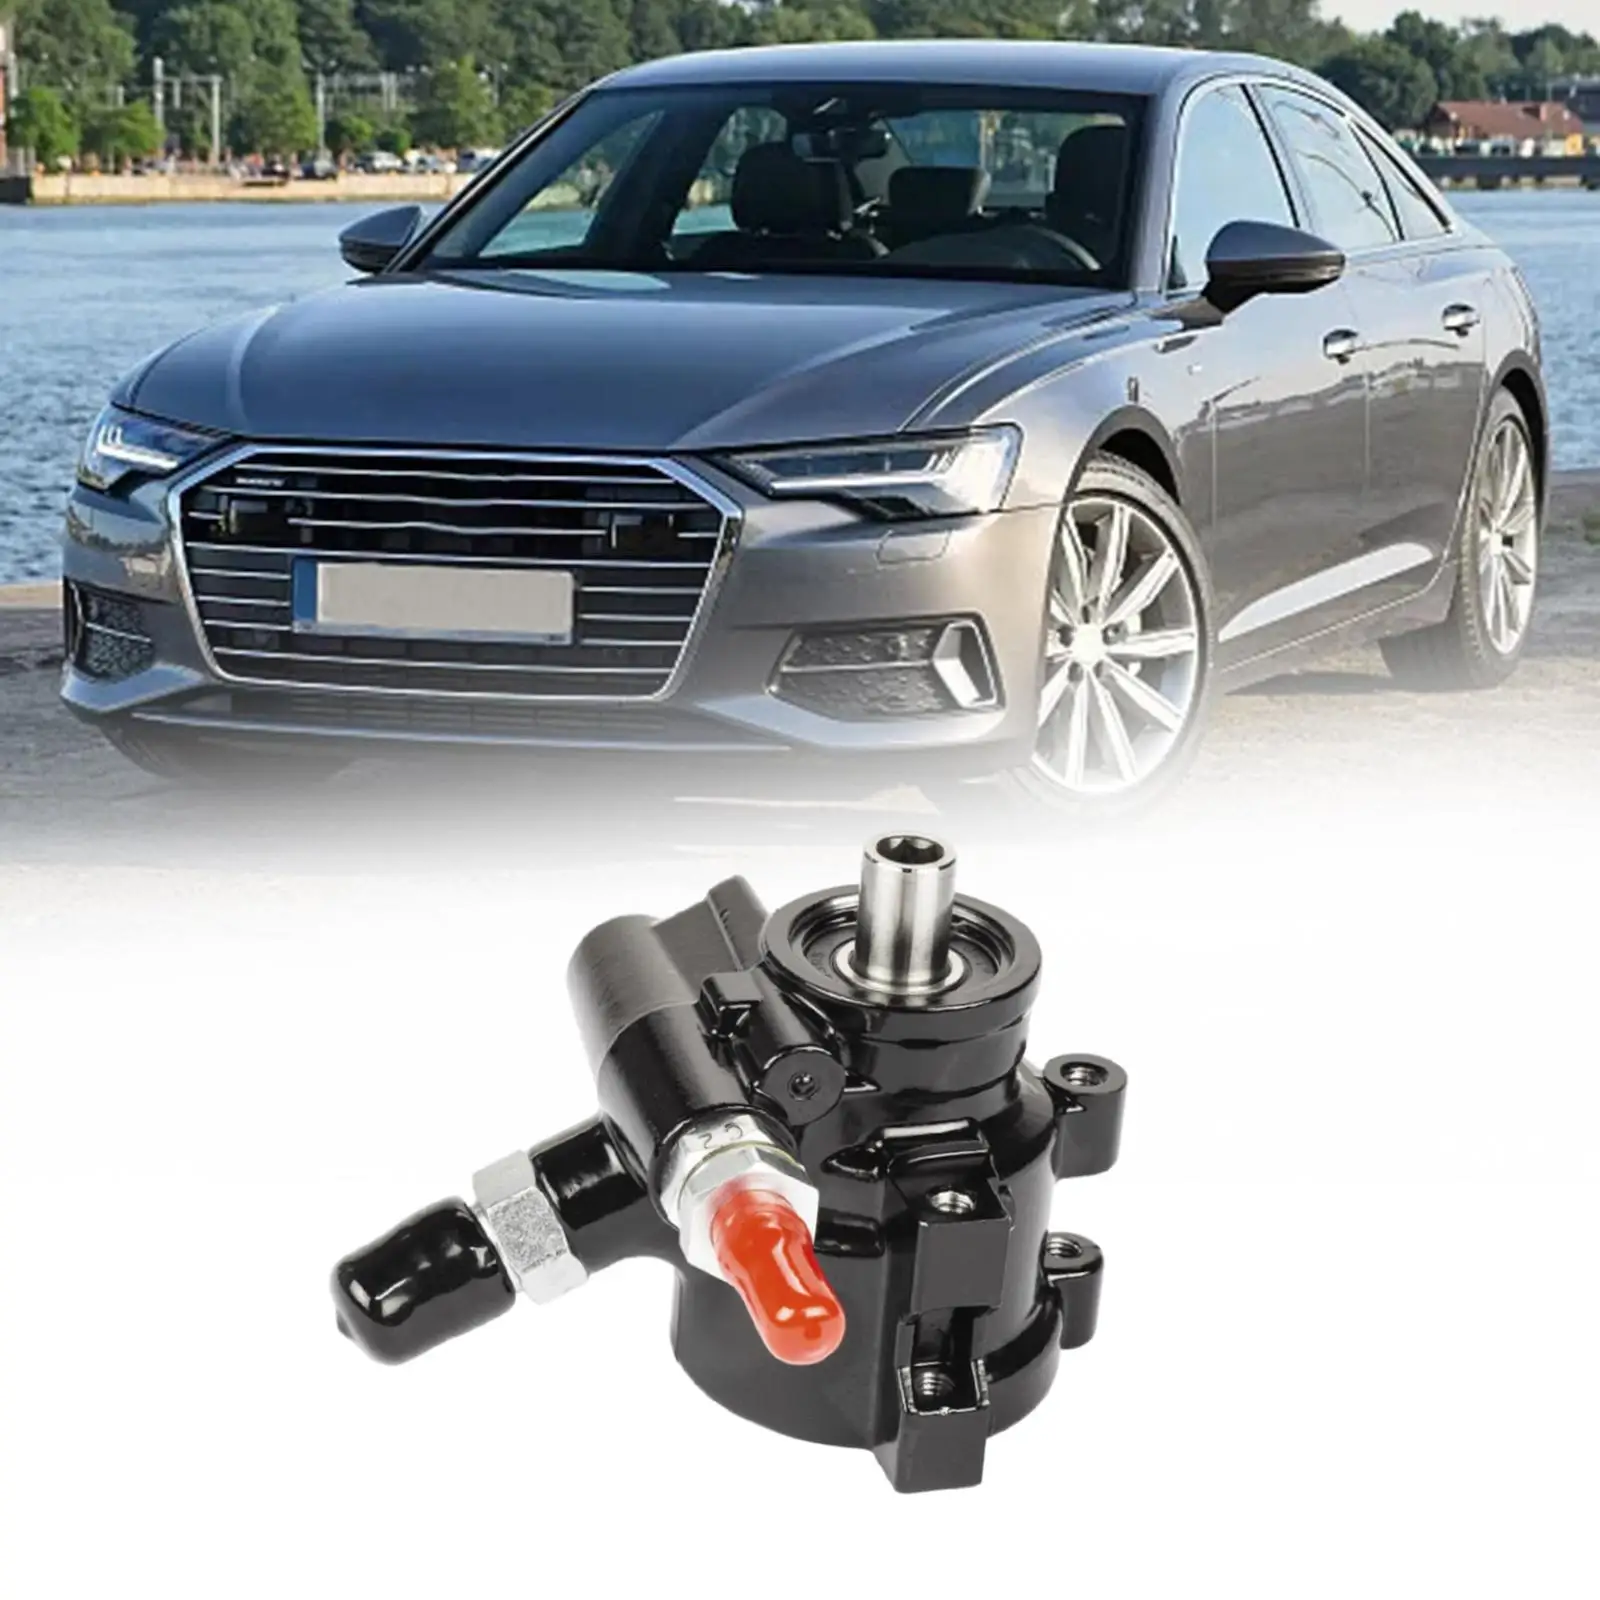 Power Steering Pump Car Accessories Durable High Performance Premium